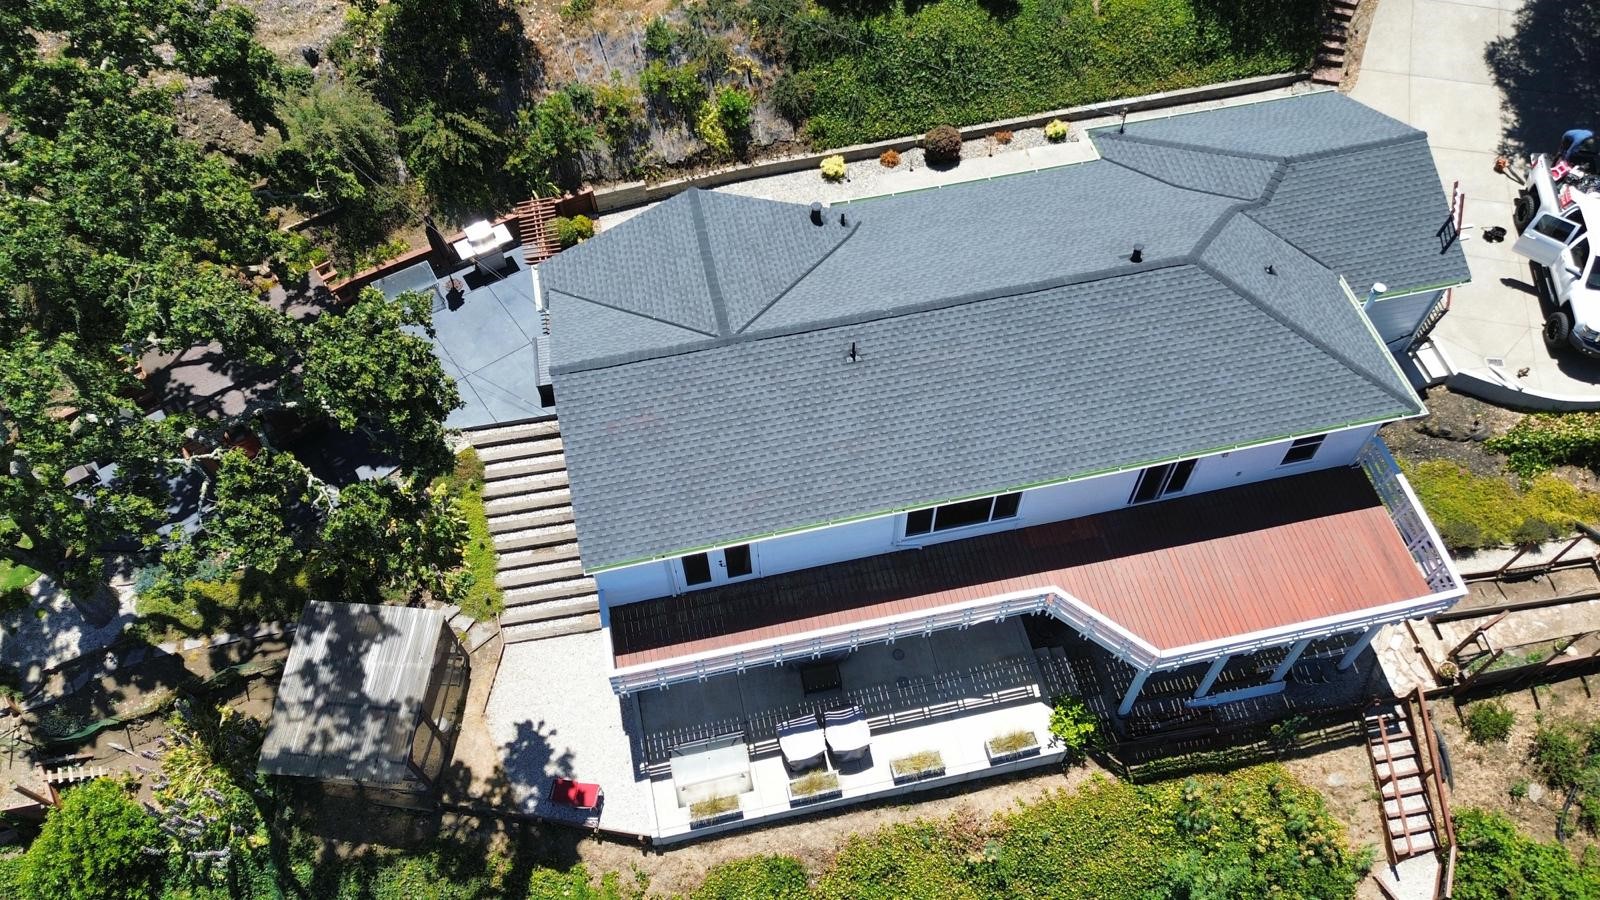 Benefits of Shingle Roof Replacement in Santa Cruz